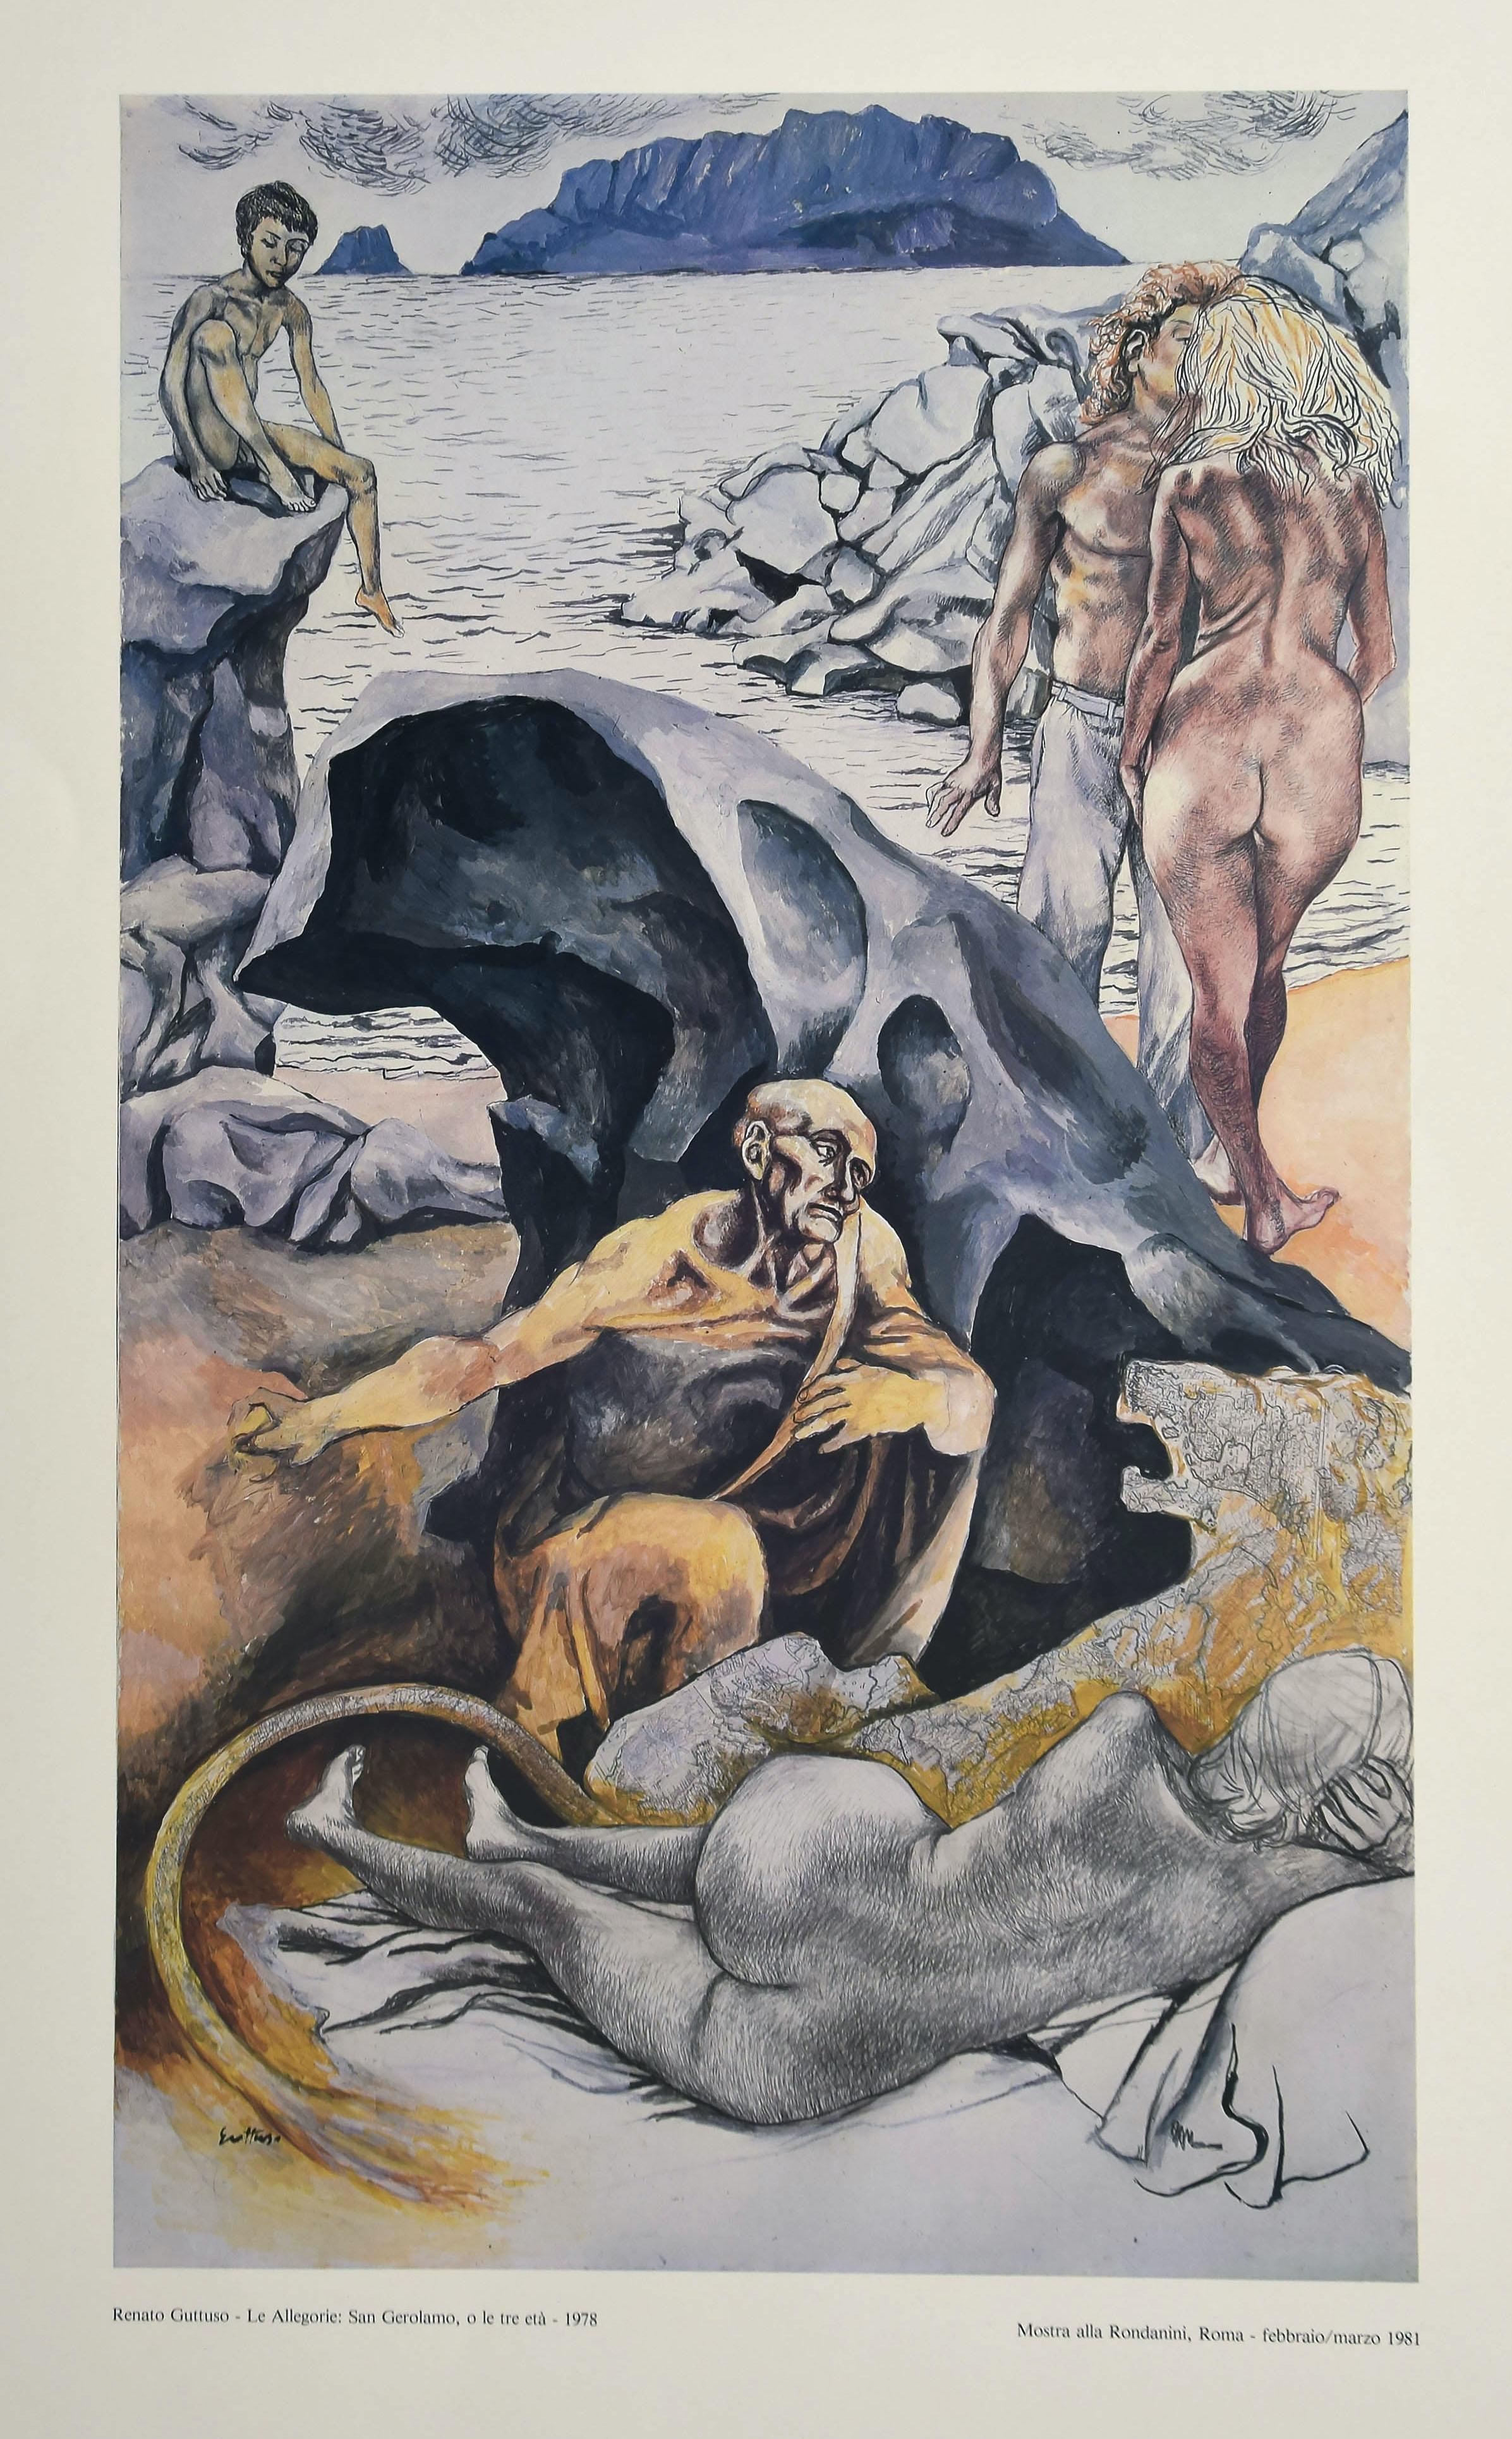 Renato Guttuso Figurative Print - Allegories: St. Jerome  - Vintage Offset Poster - 1978